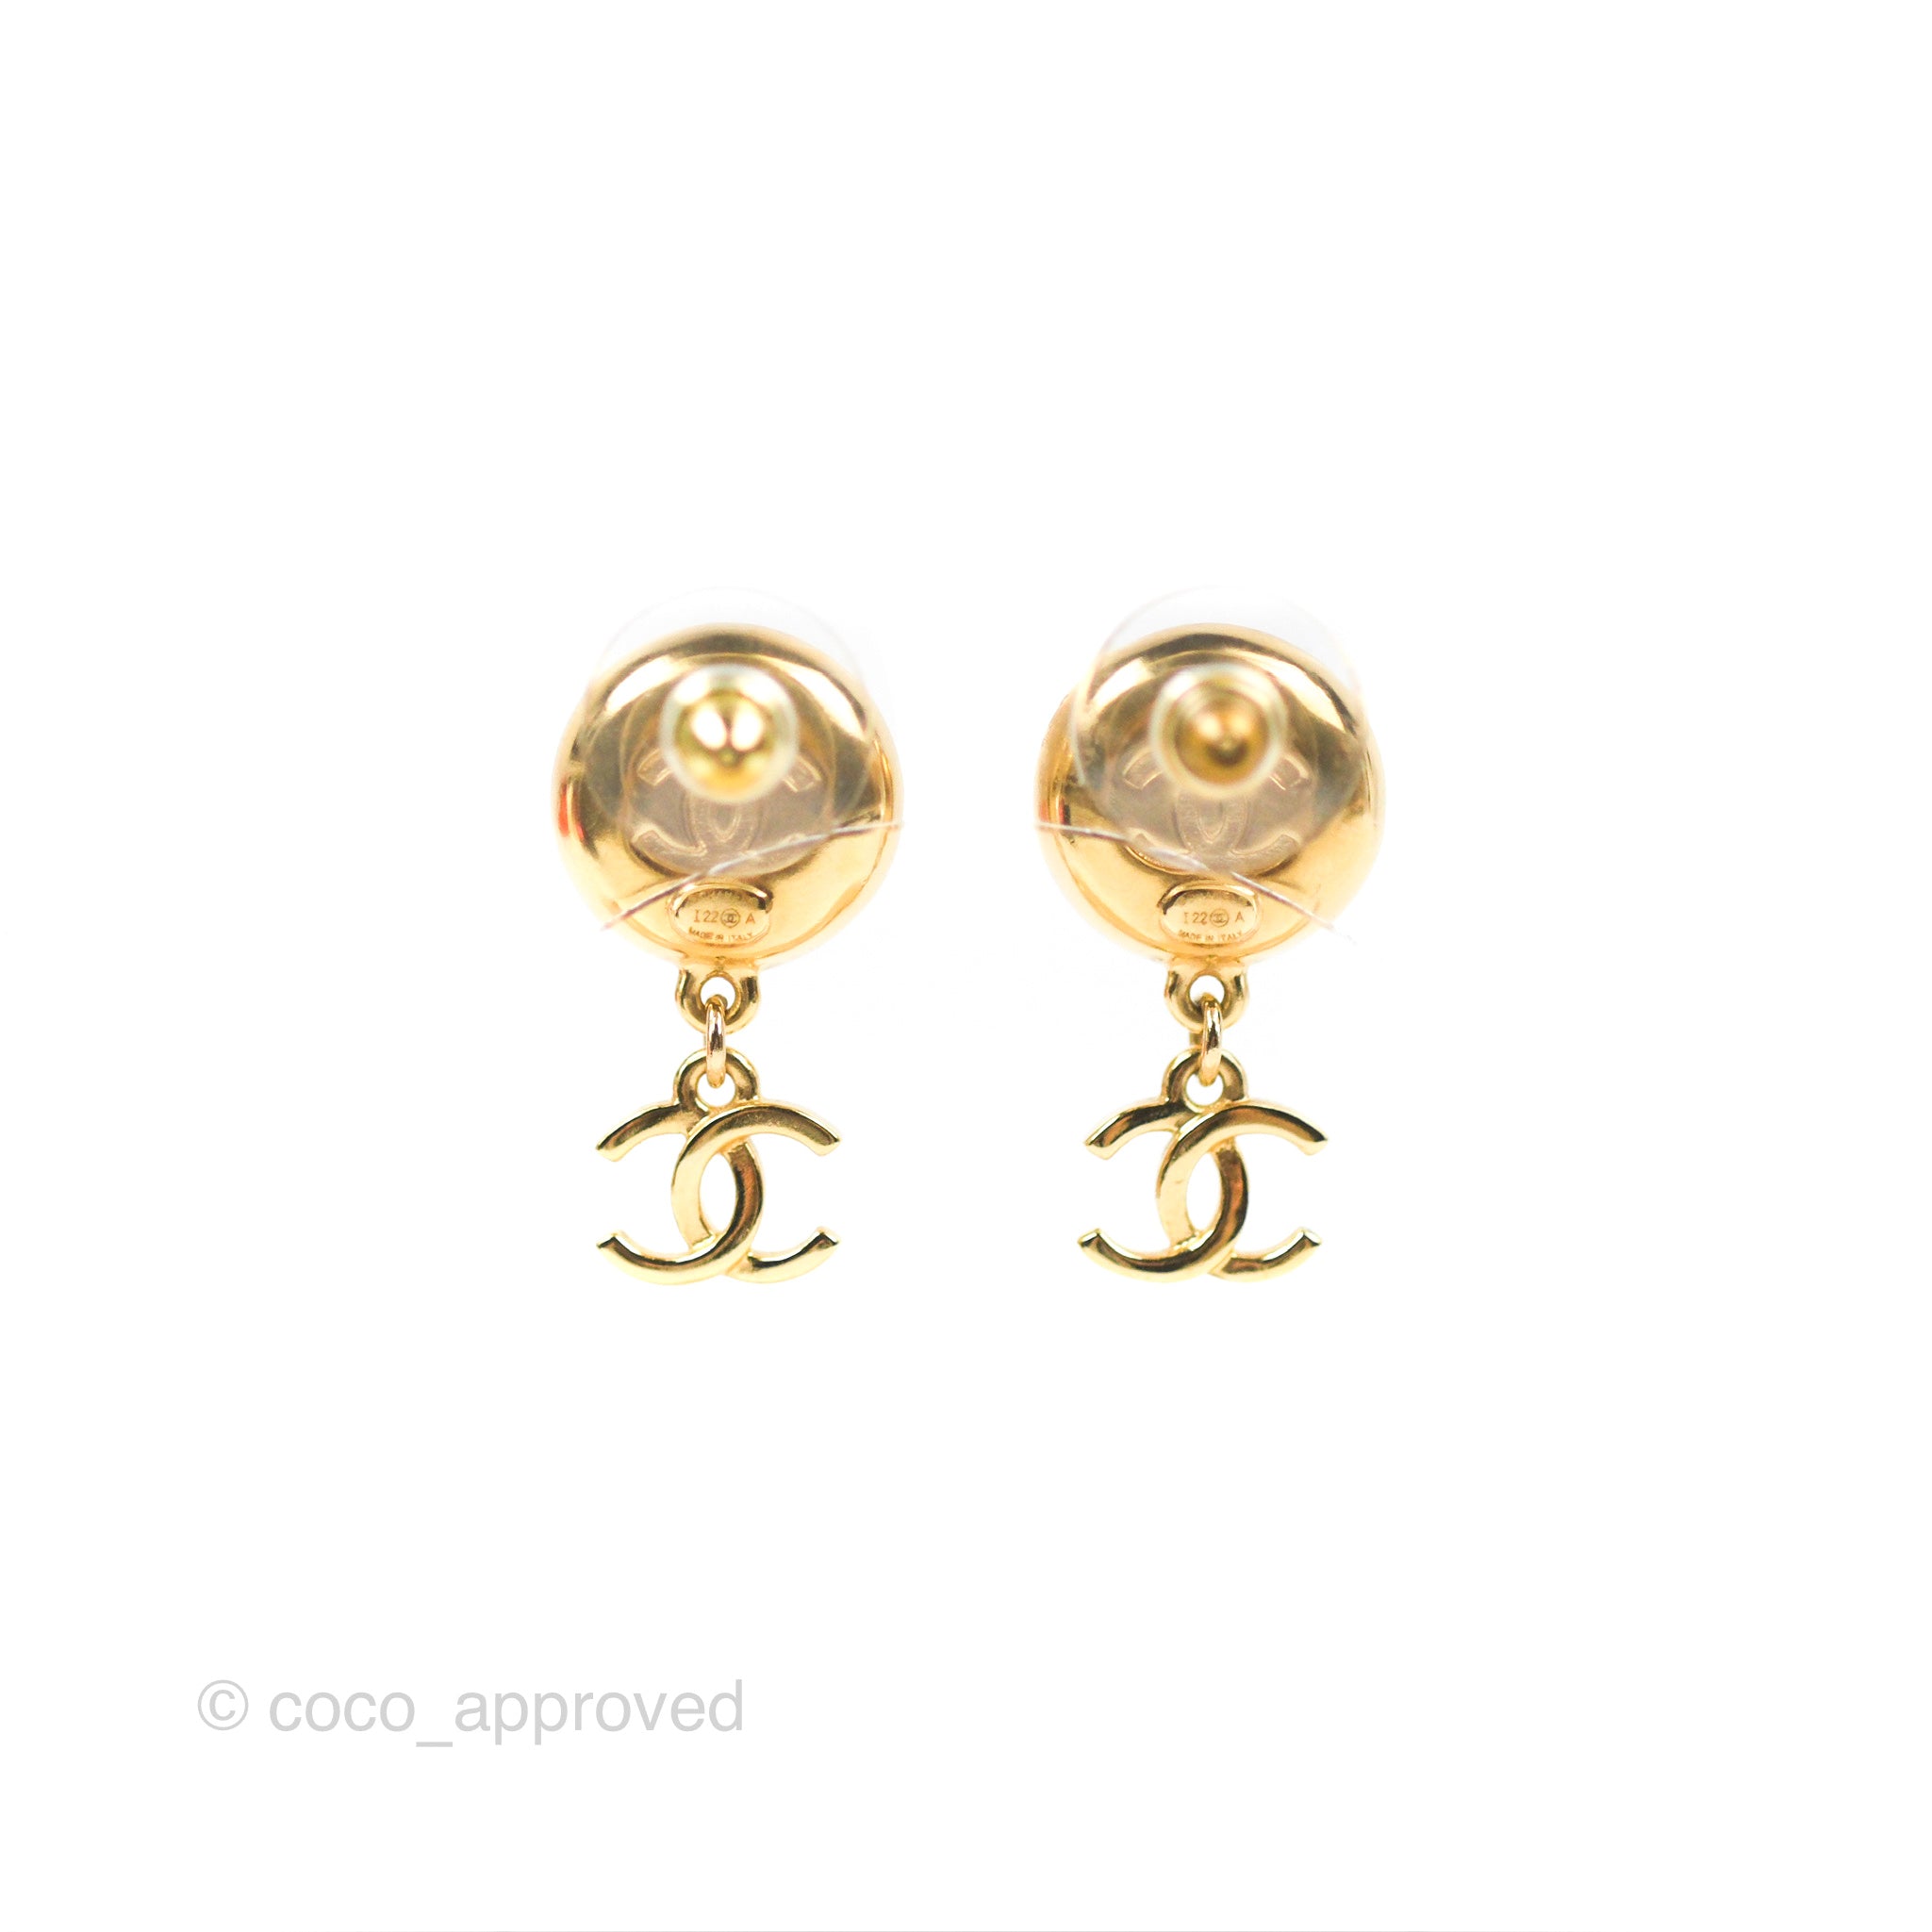 Chanel Gold-tone Cc Faux Pearl Bracelet in Metallic